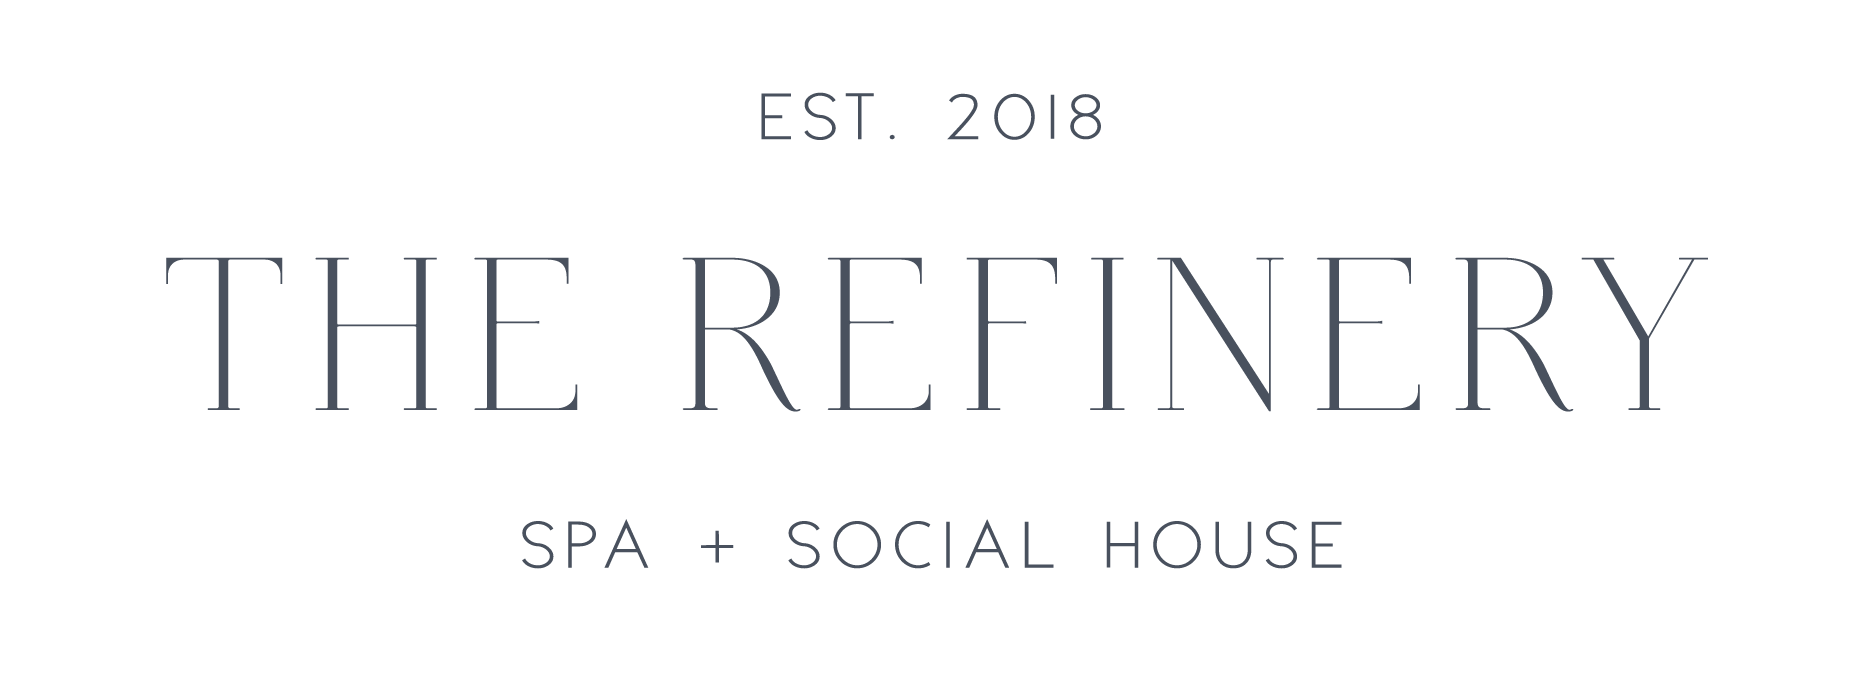 The Refinery Spa + Social House